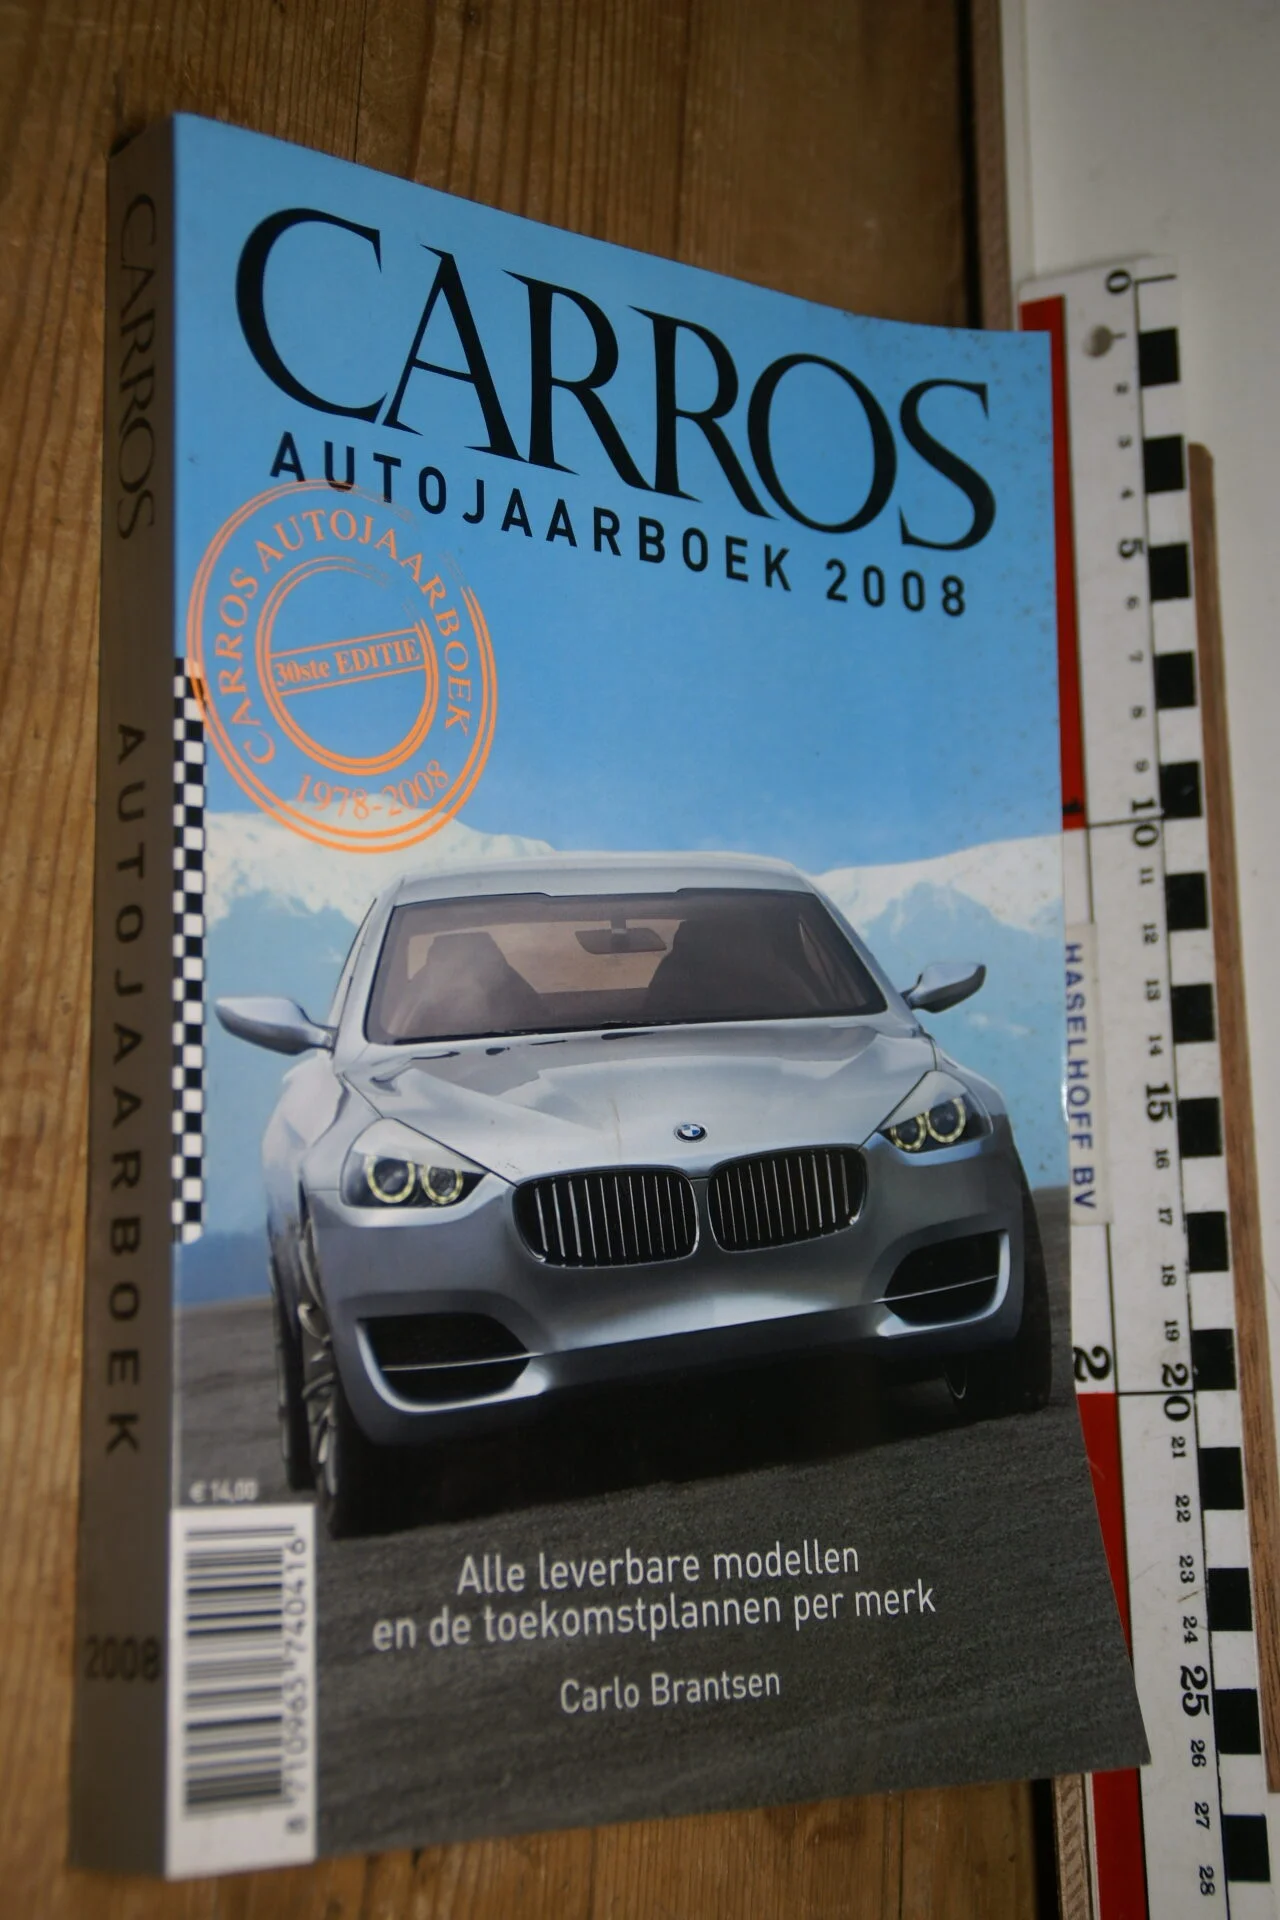 DSC02884 2008 Carros Autojaarboek alle auto's Carlo Brantsen-796b4fbf